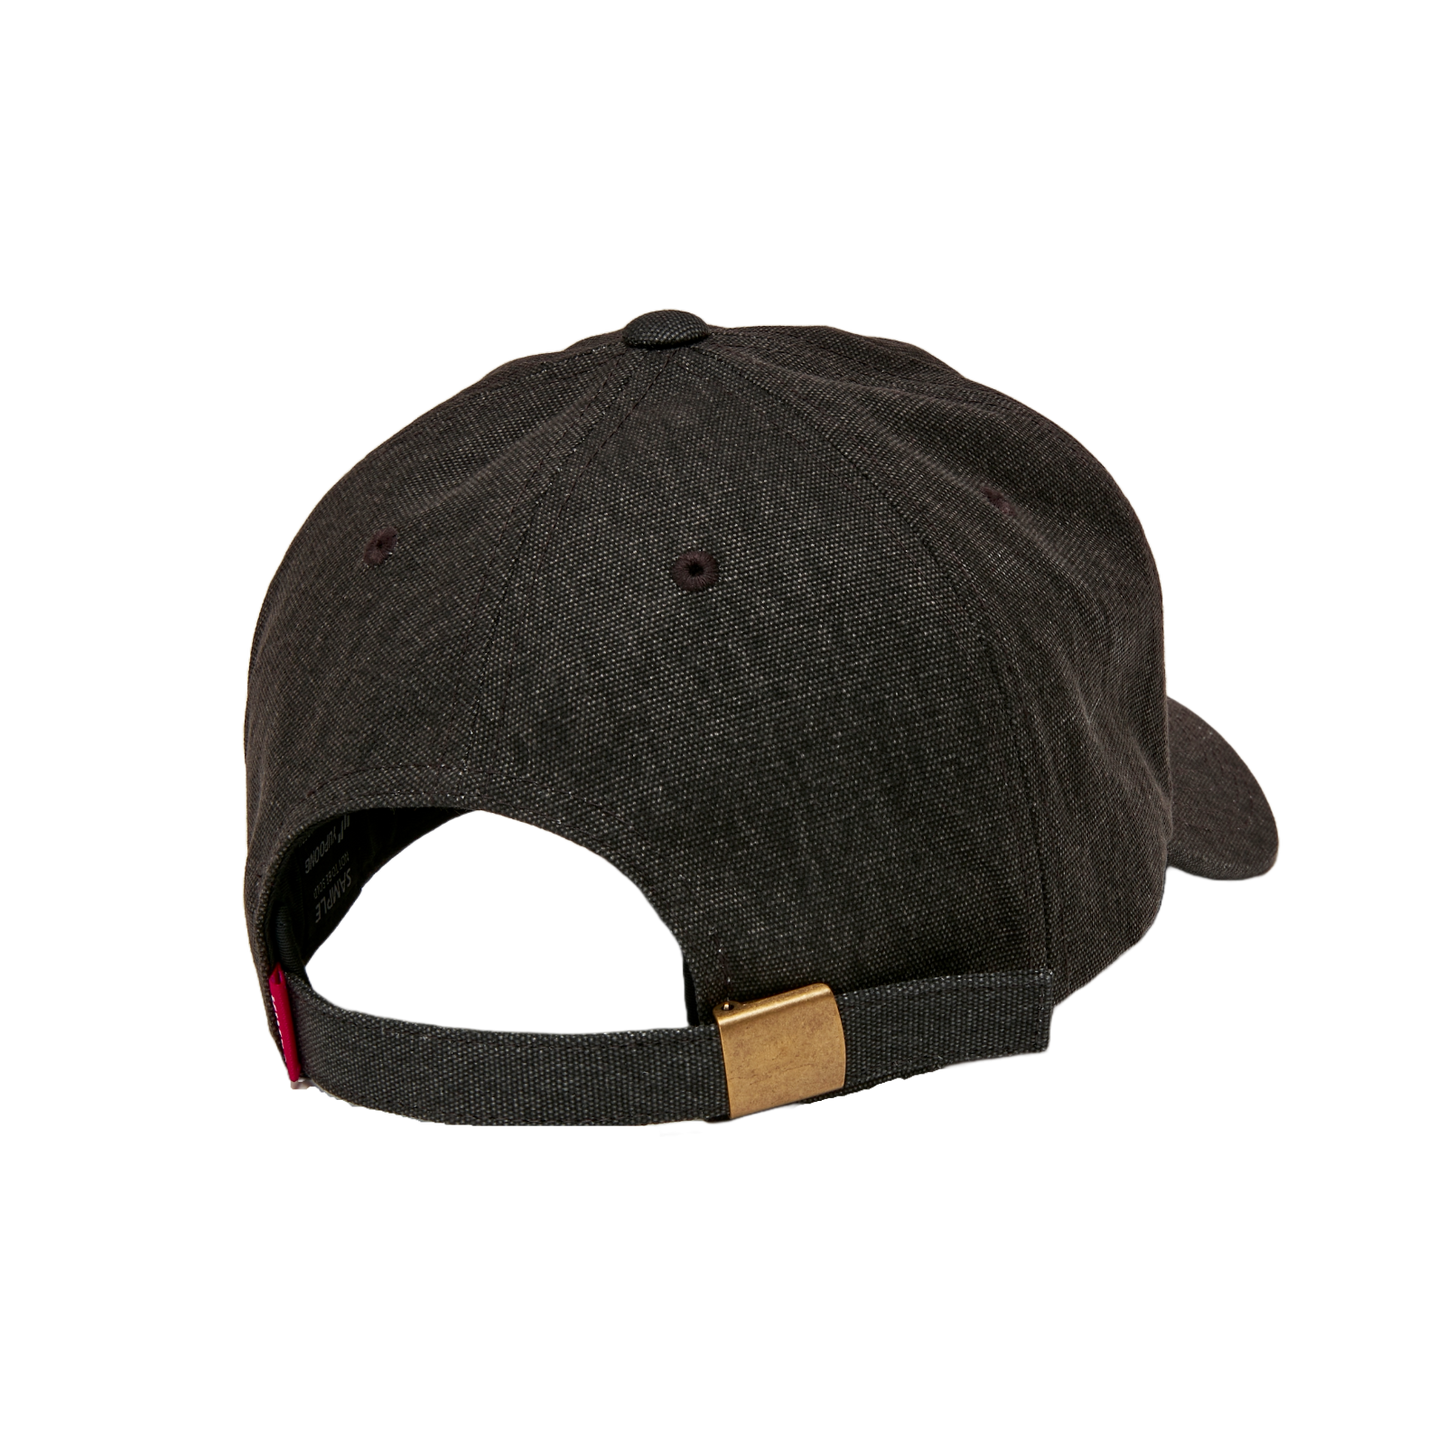 Kimes Ranch Mini Hux Graphic Black Baseball Cap MINI-HUX-BLACK